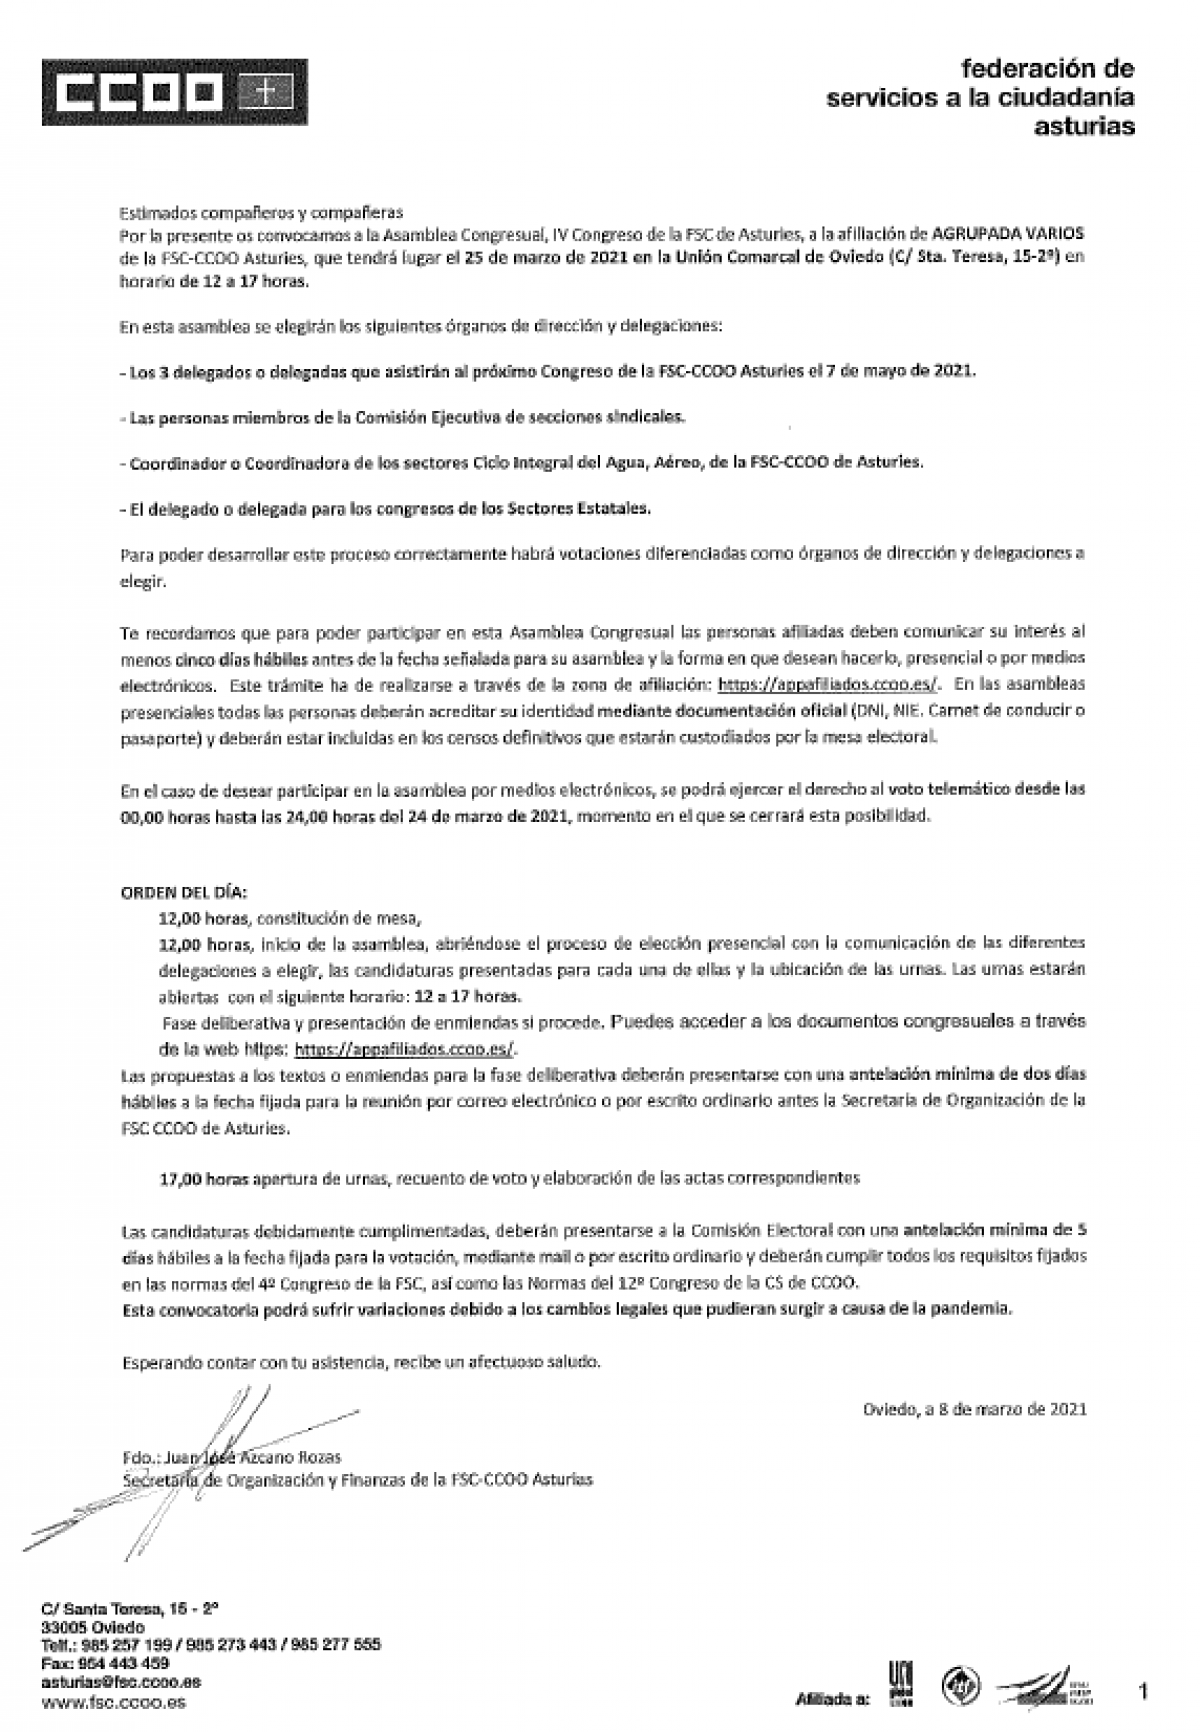 Convocatoria asamblea congresual Agrupada-Varios 25-3-21 FSC Asturias